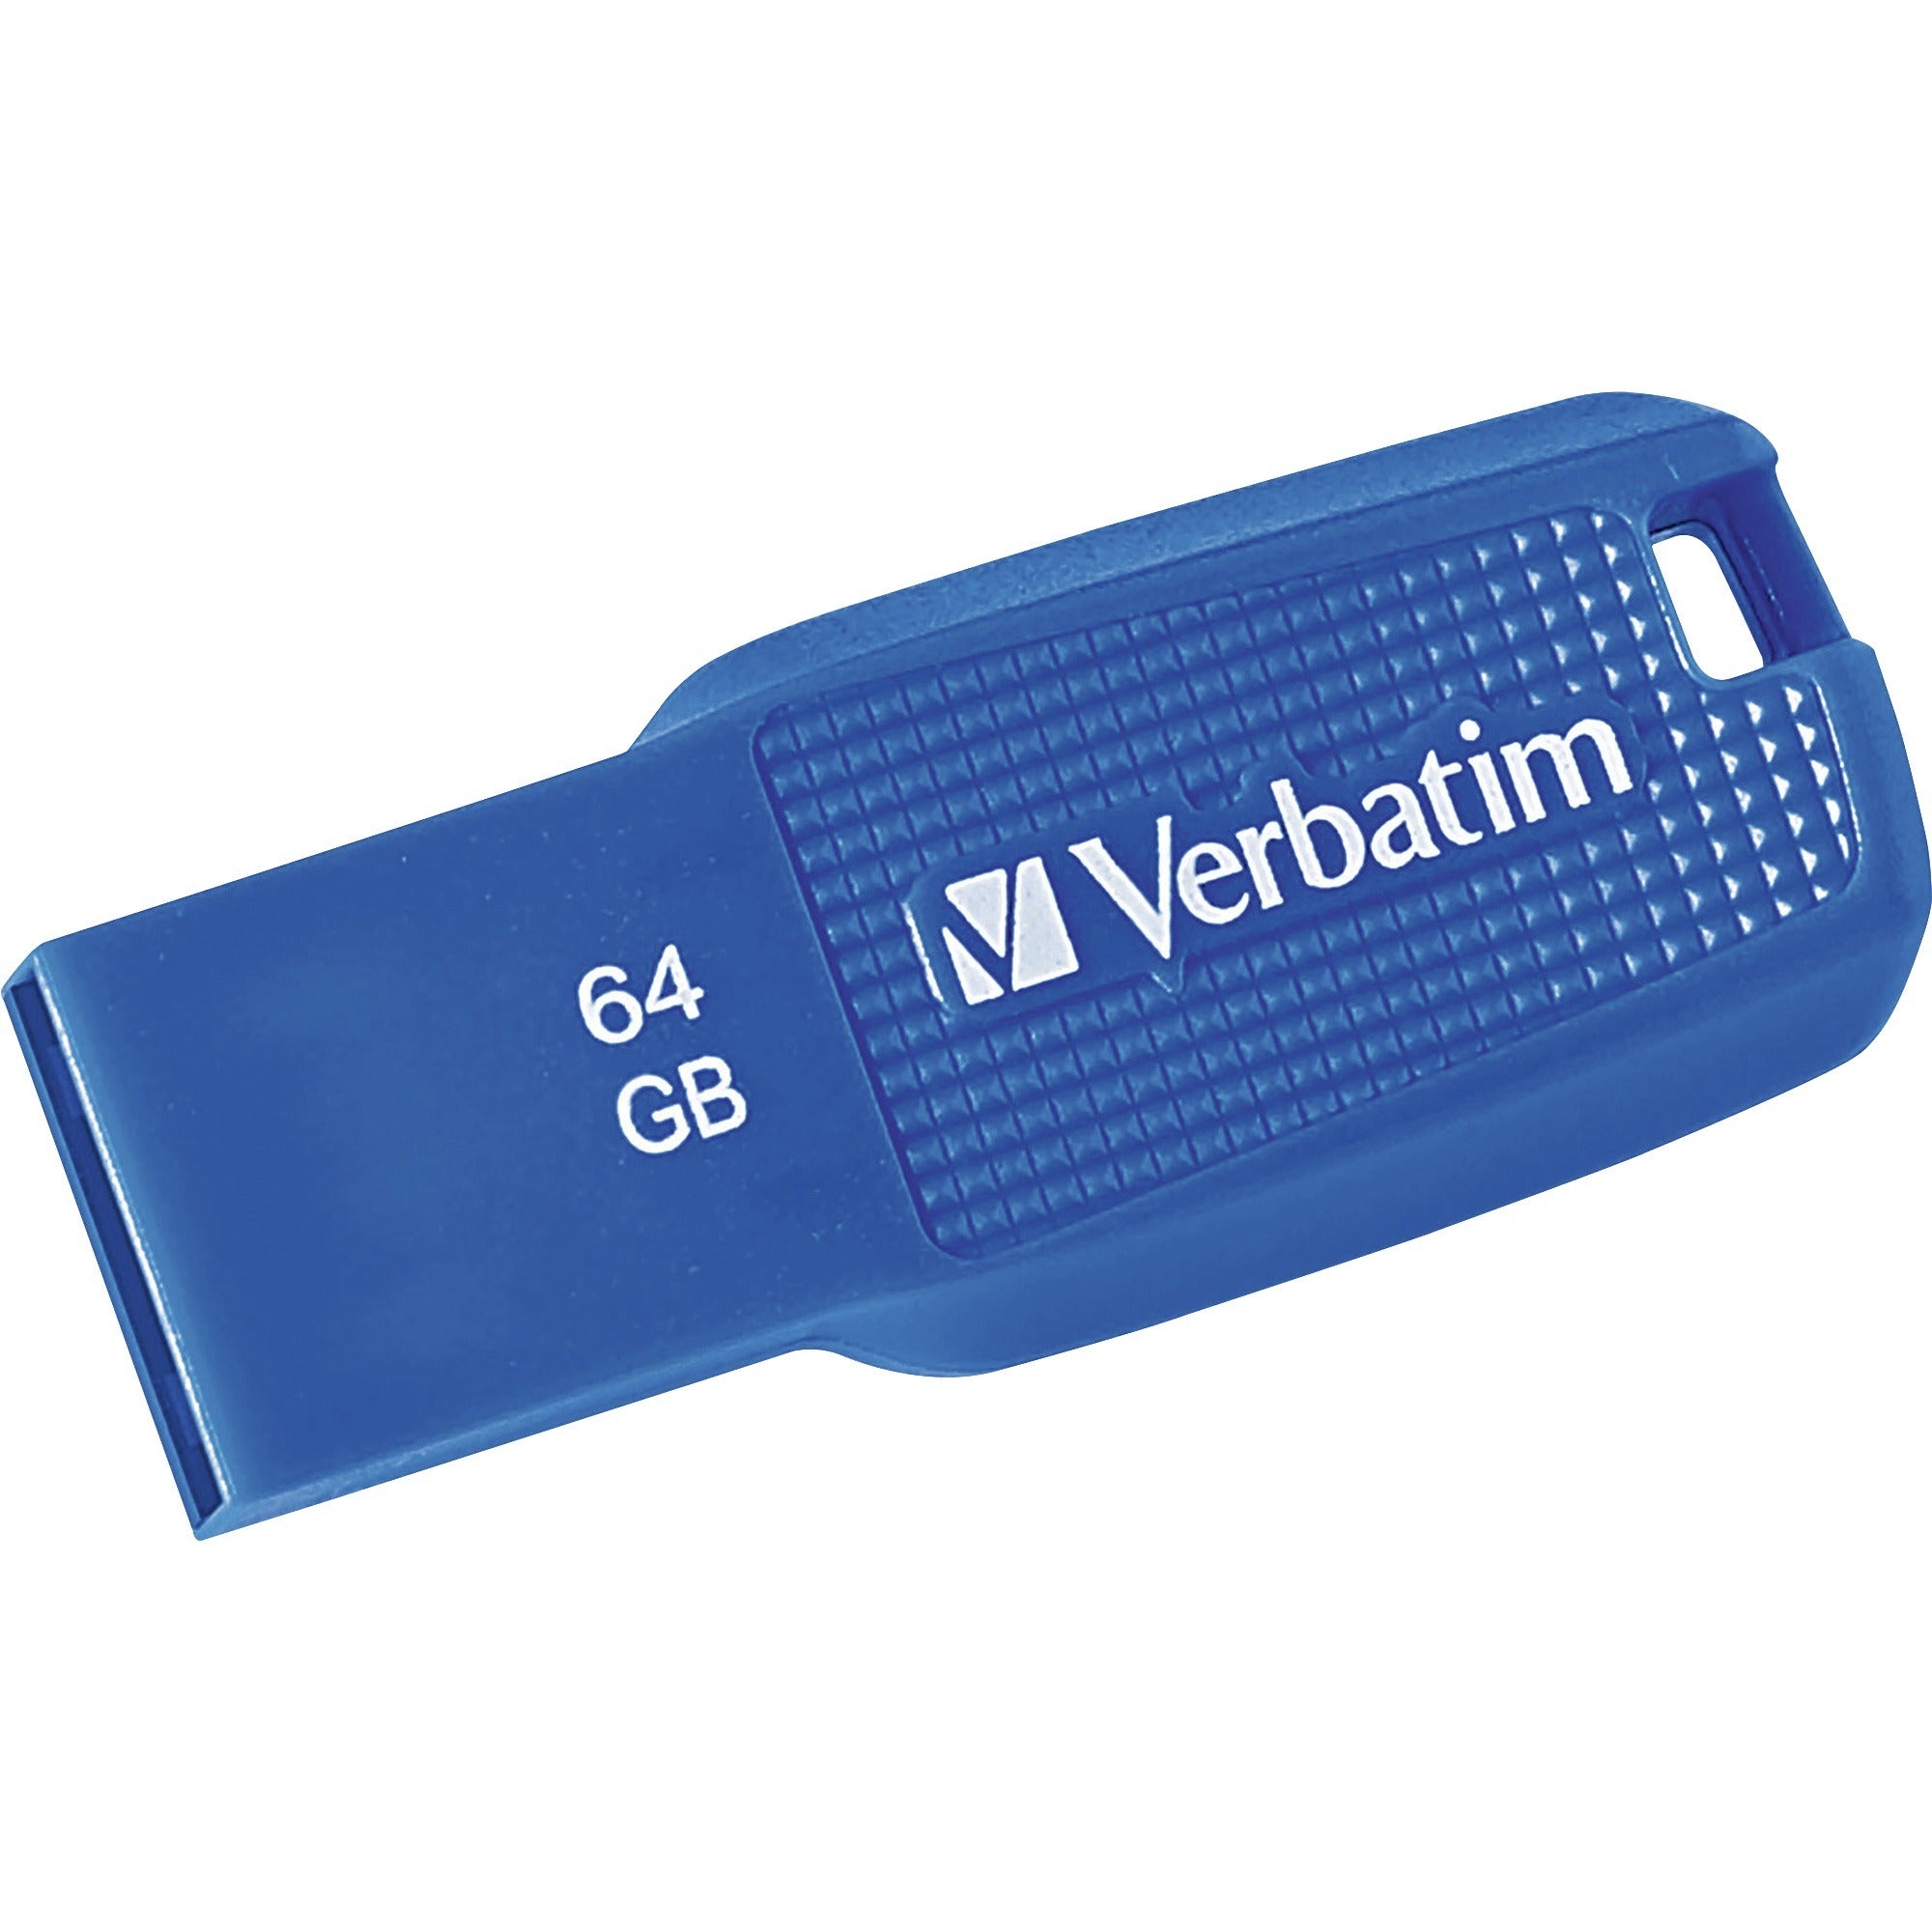 Verbatim 64GB Ergo USB 3.0 Flash Drive - Blue - The Verbatim Ergo USB drive features an ergonomic design for in-hand comfort and COB design for enhanced reliability. - 1